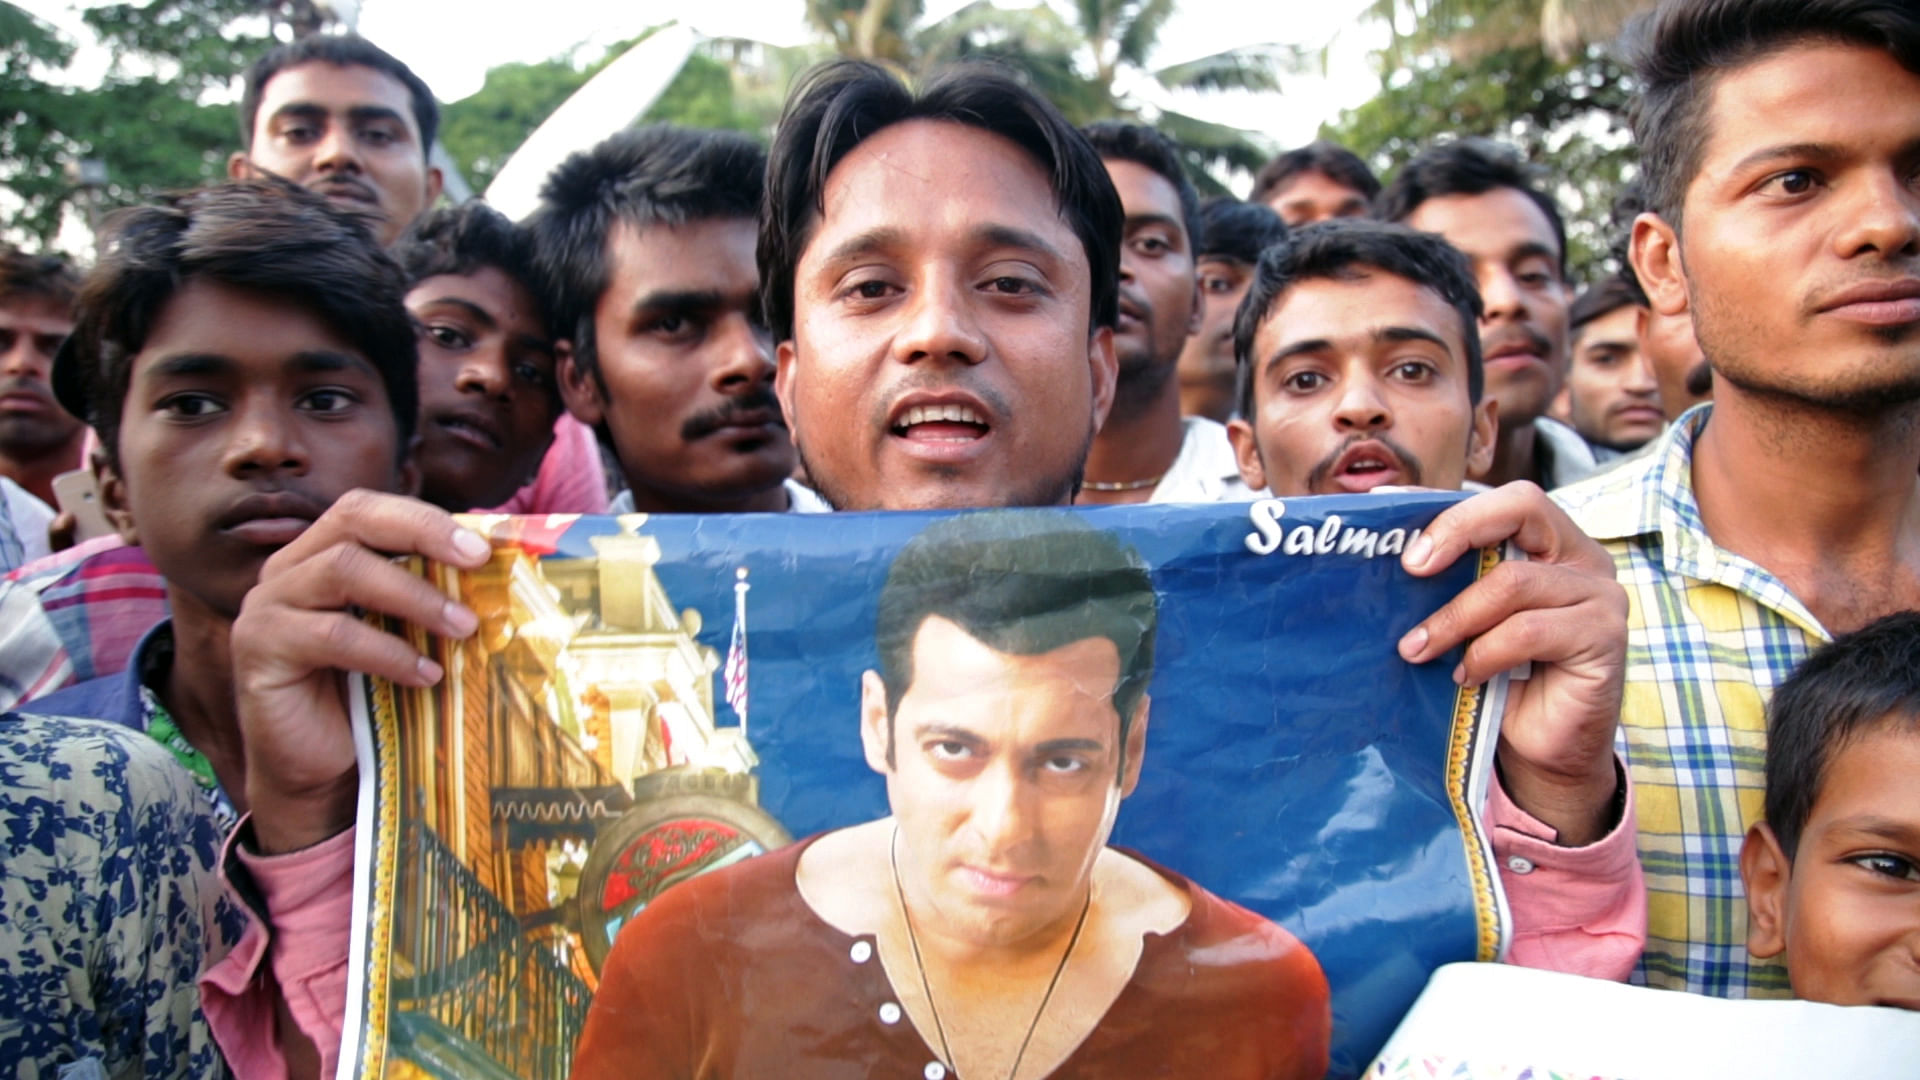 Fan frenzy outside Salman Khan’s home in Bandra, Mumbai (Photo: The Quint)